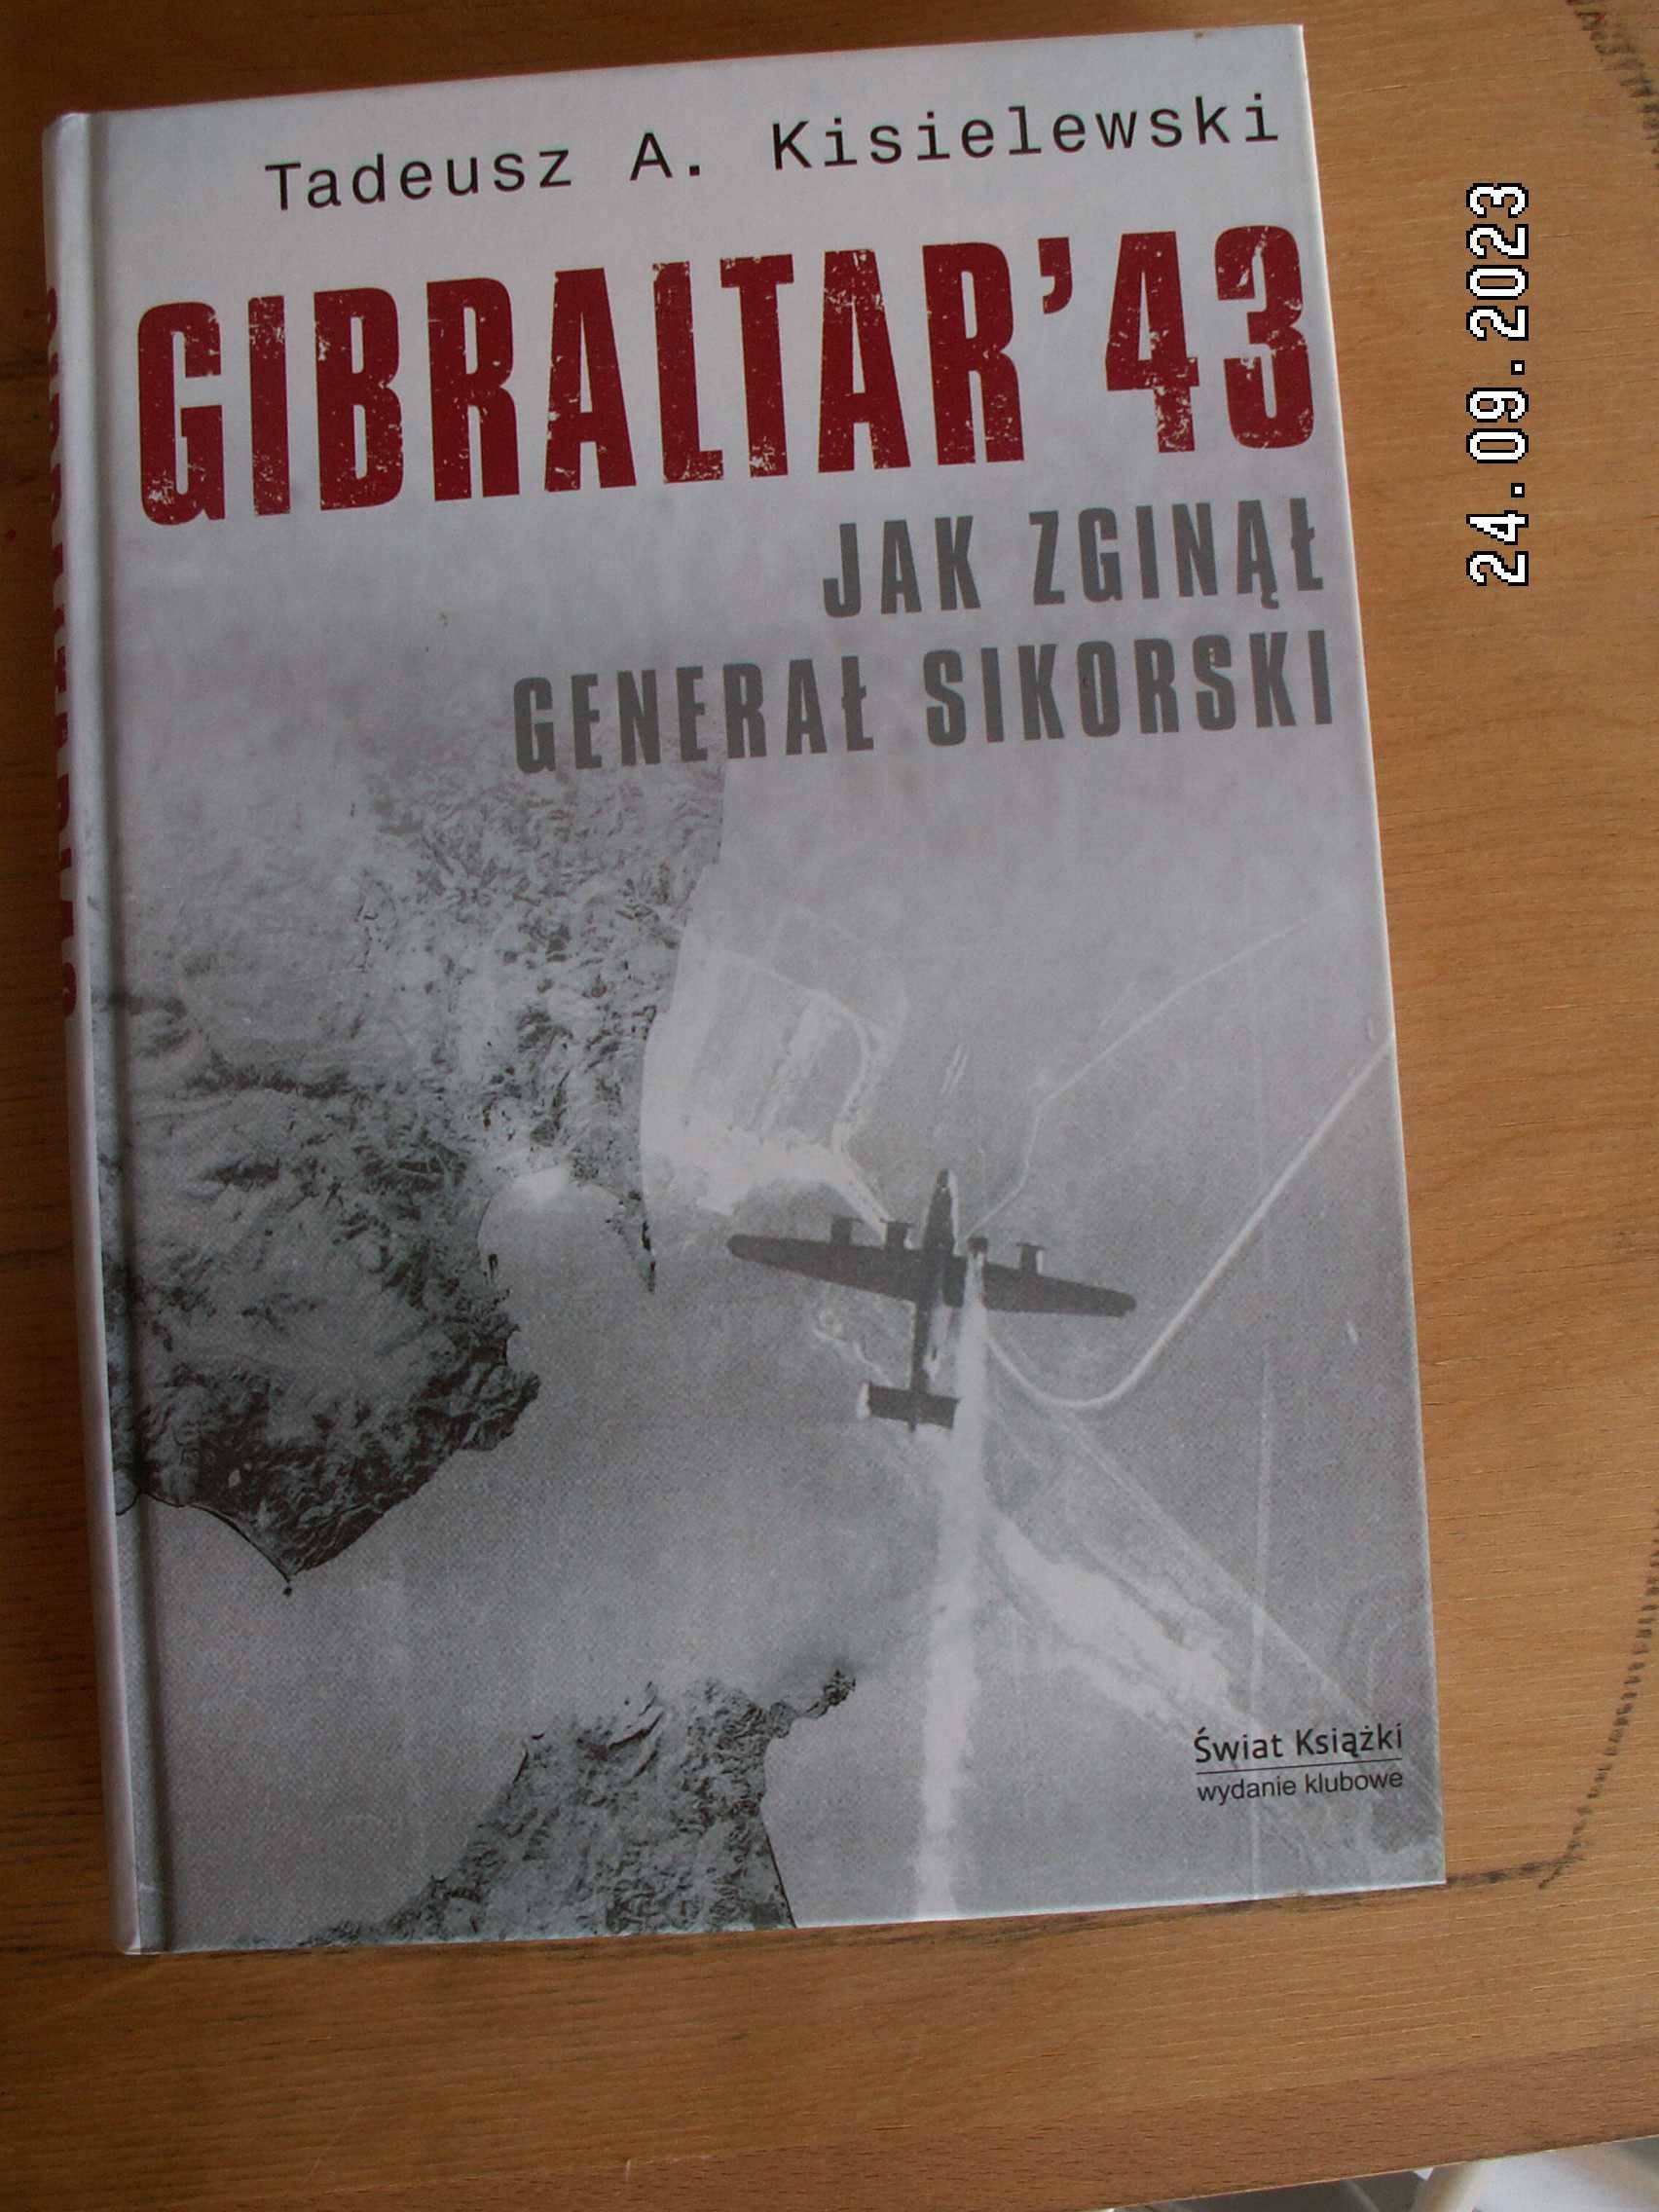 Gibraltar 43, jak zginął gen. Sikorski